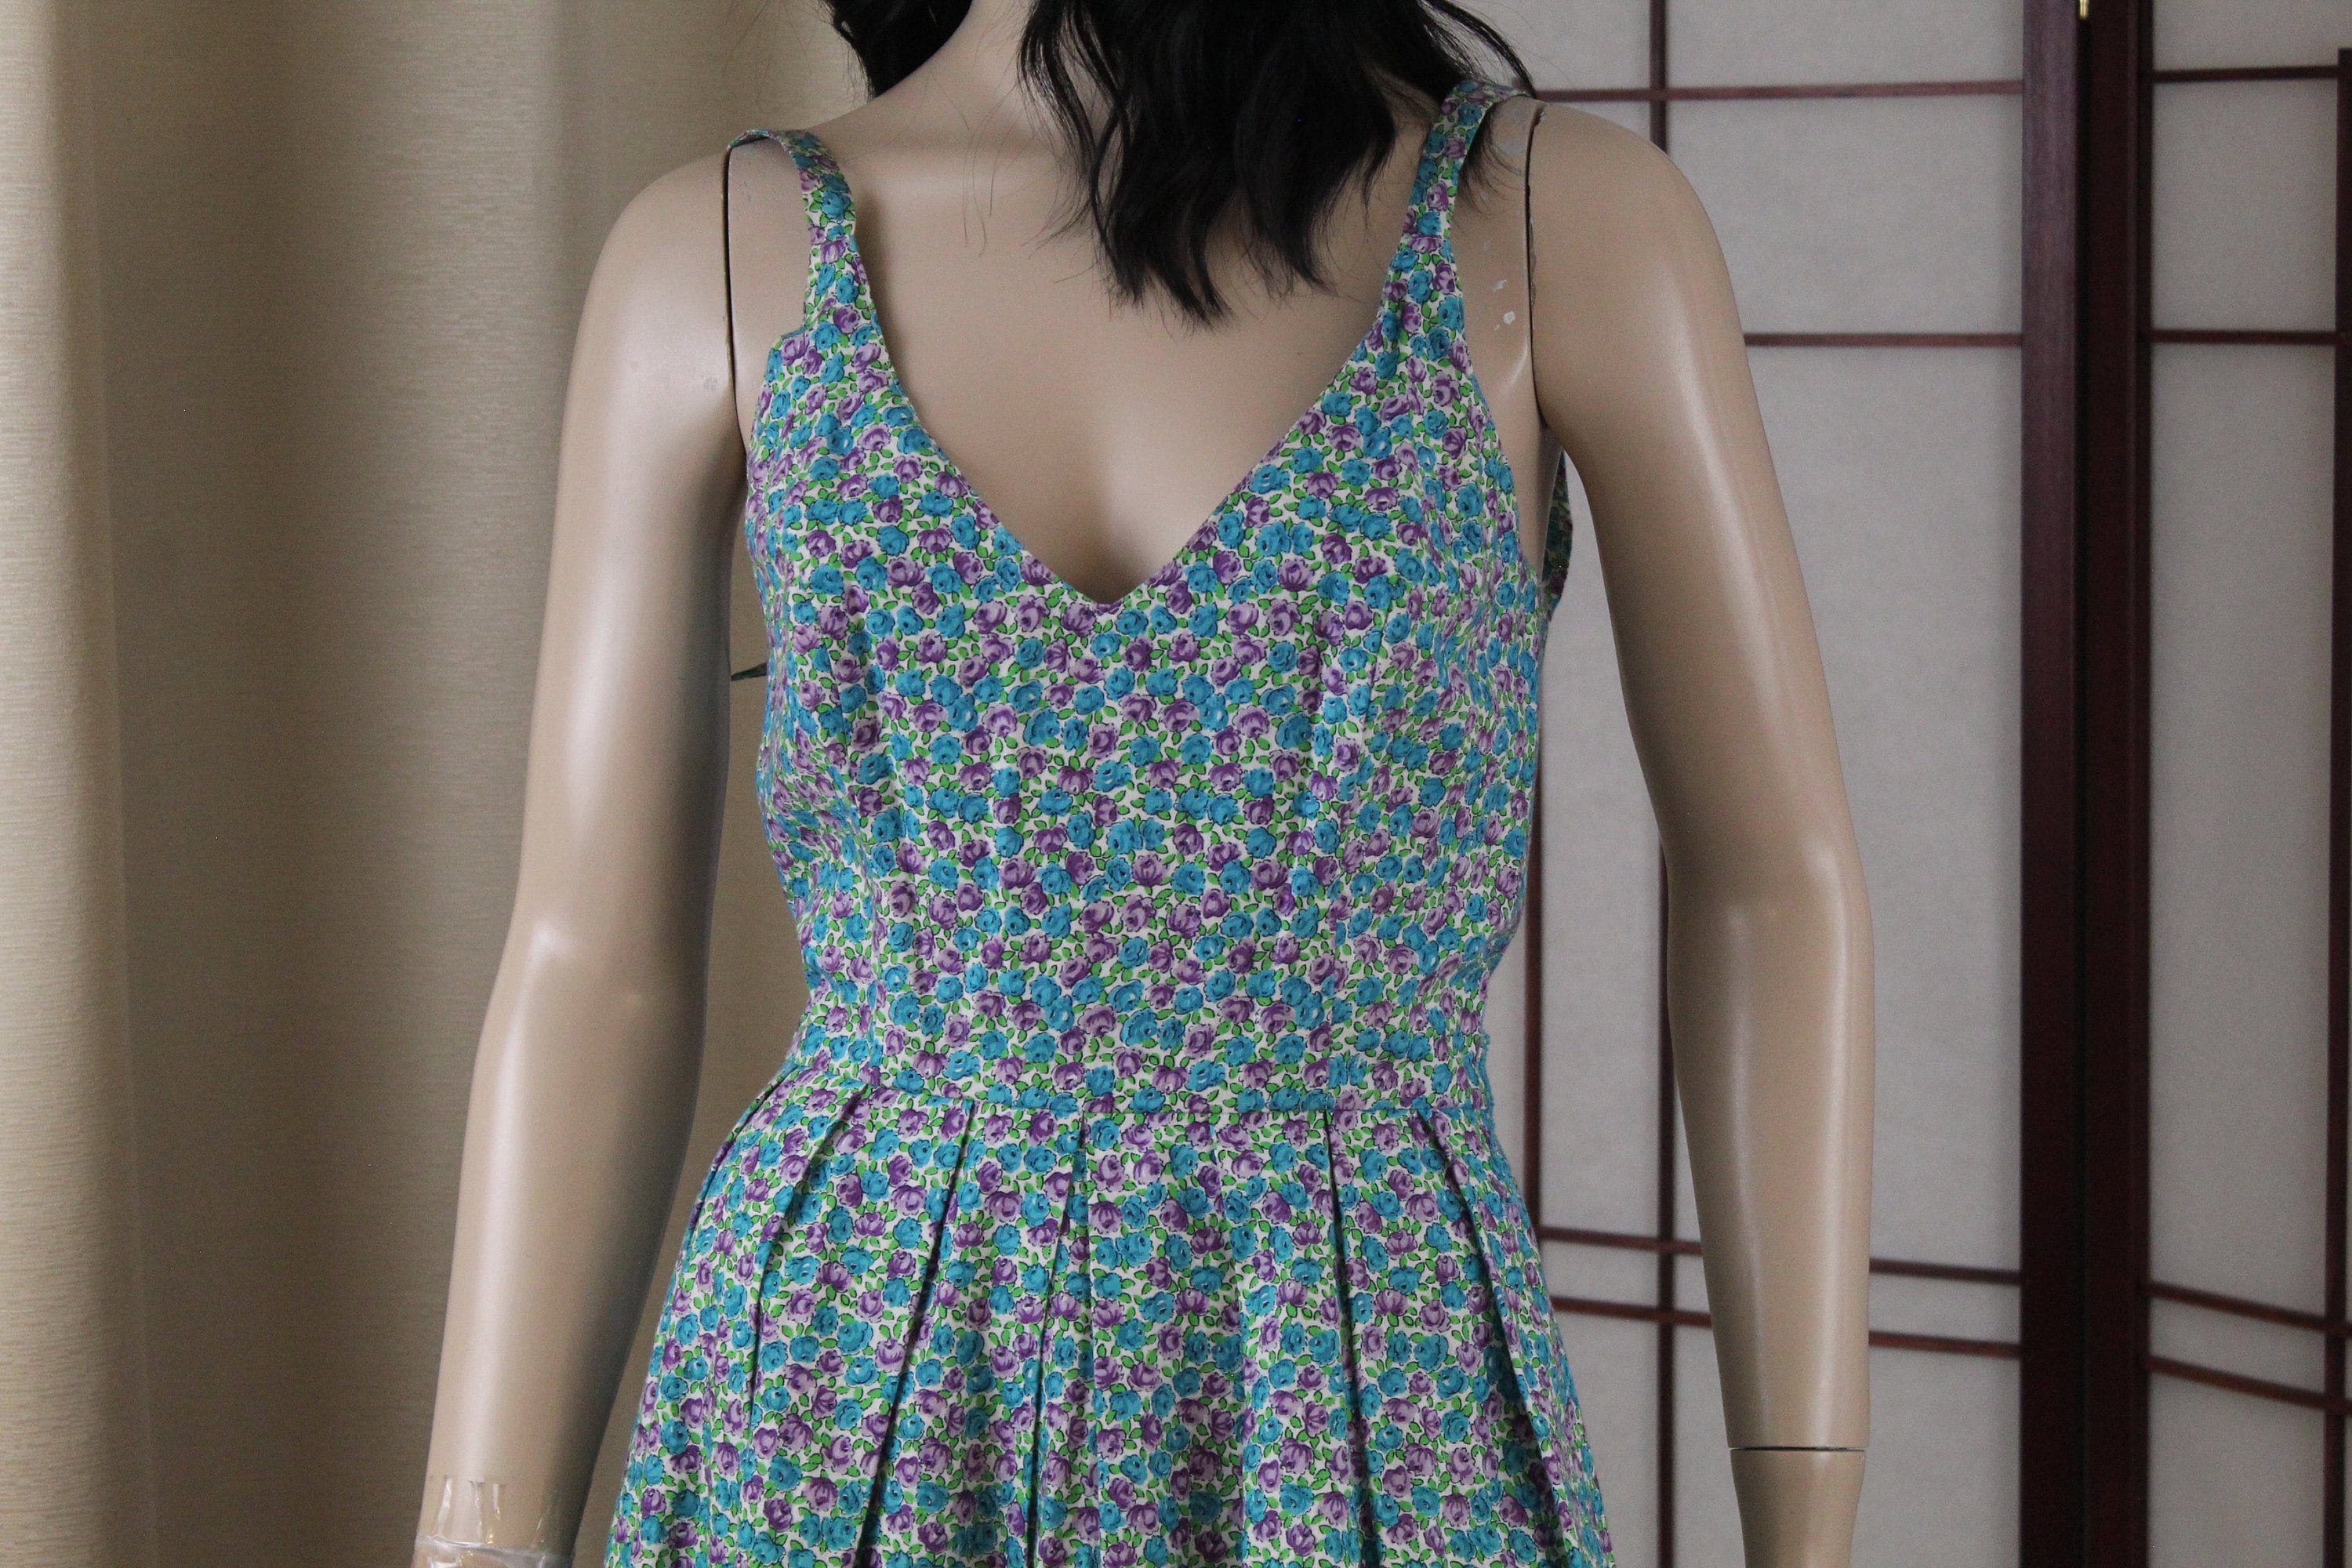 Turquoise Cami Slip Dress (Sizes 4-12) - CAM011TU